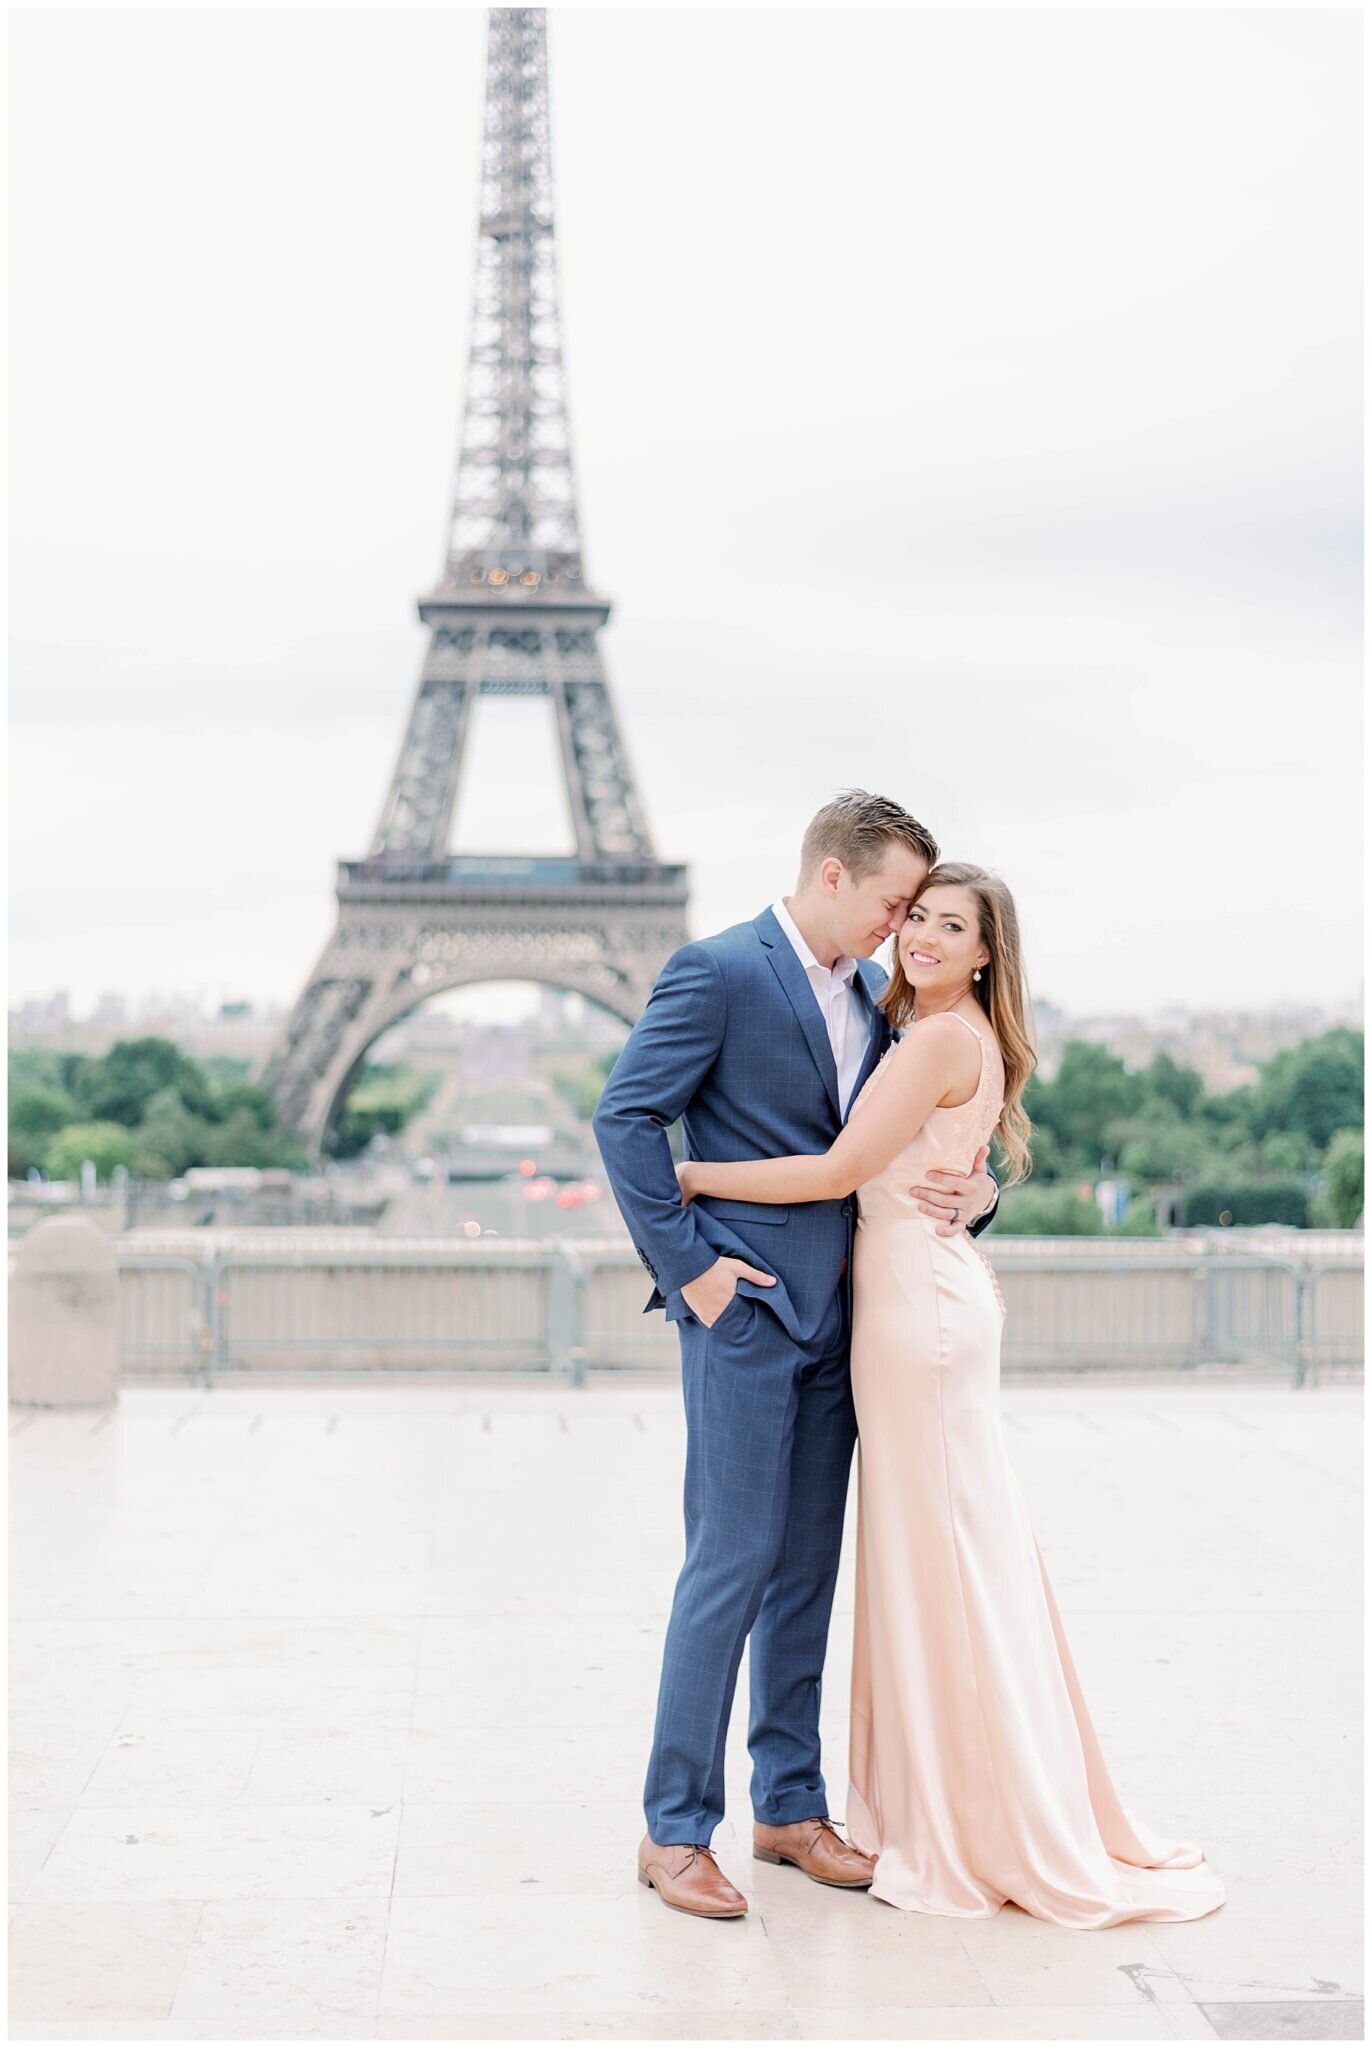 Jessica-K-Feiden-Photography_Eiffel-Tower-Paris-Engagement-Session-Photographer_0015-1372x2048